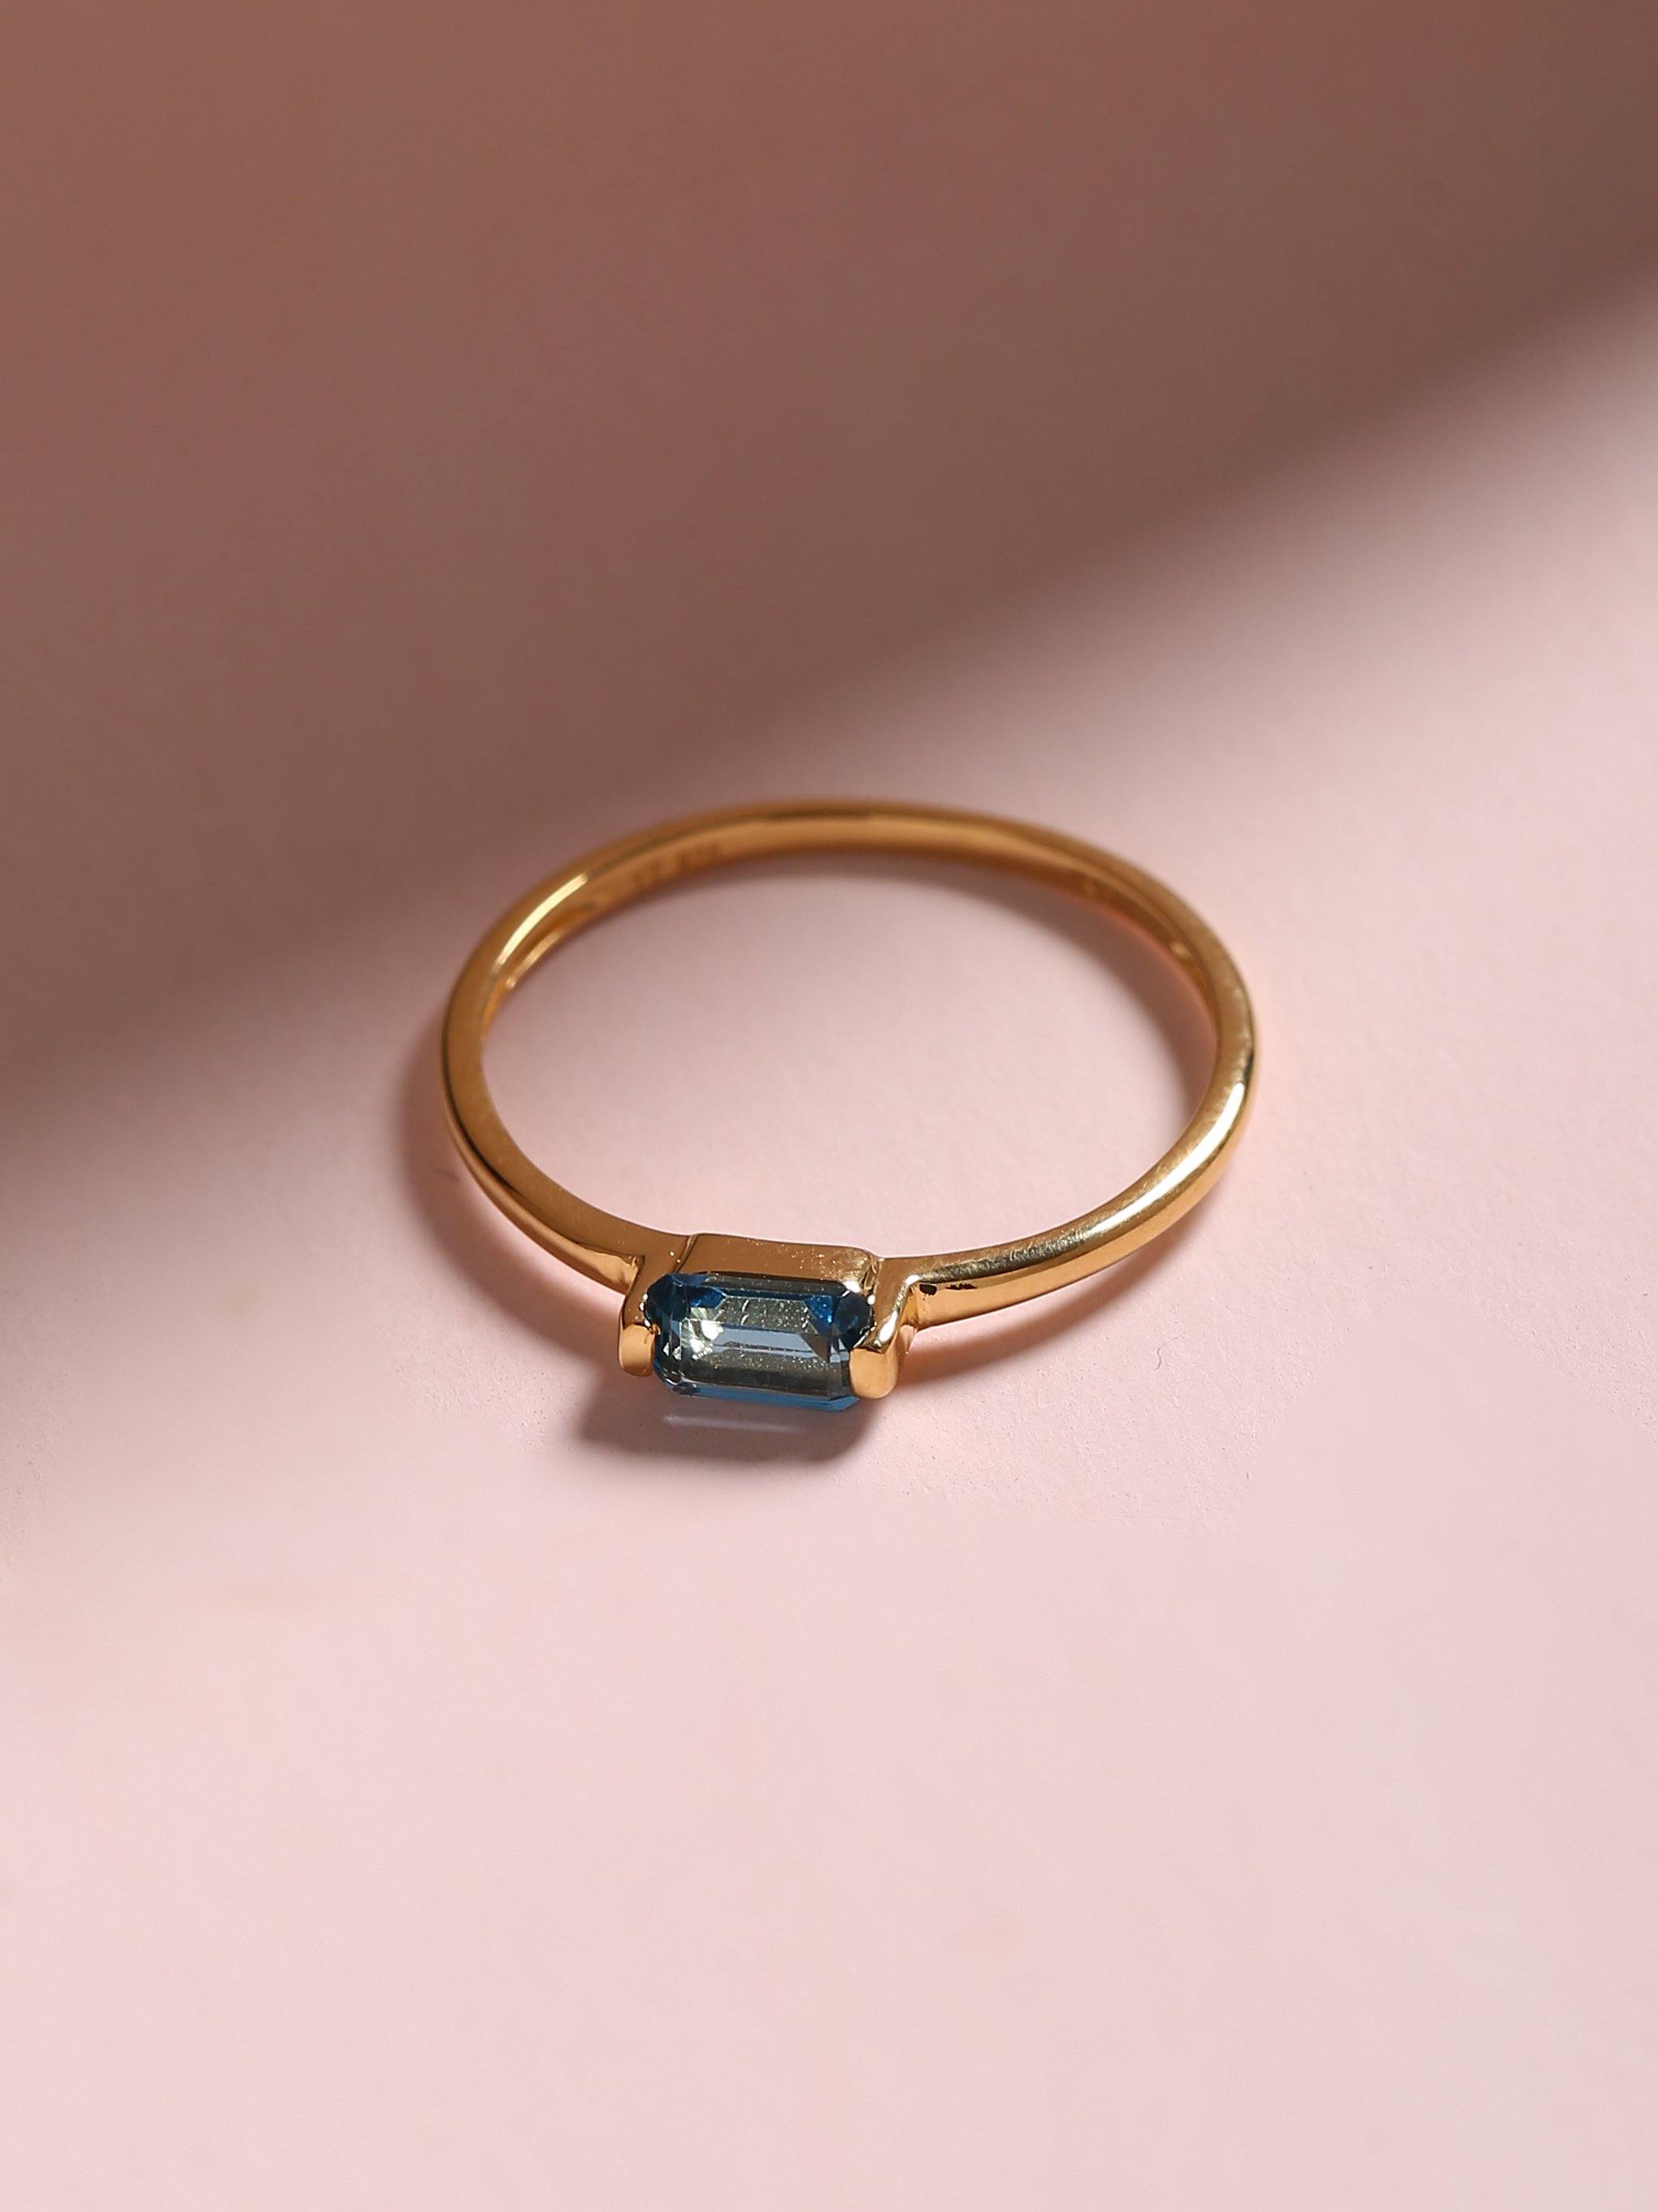 London Blue Topaz Solid 10K Yellow Gold Gemstone Ring - YoTreasure